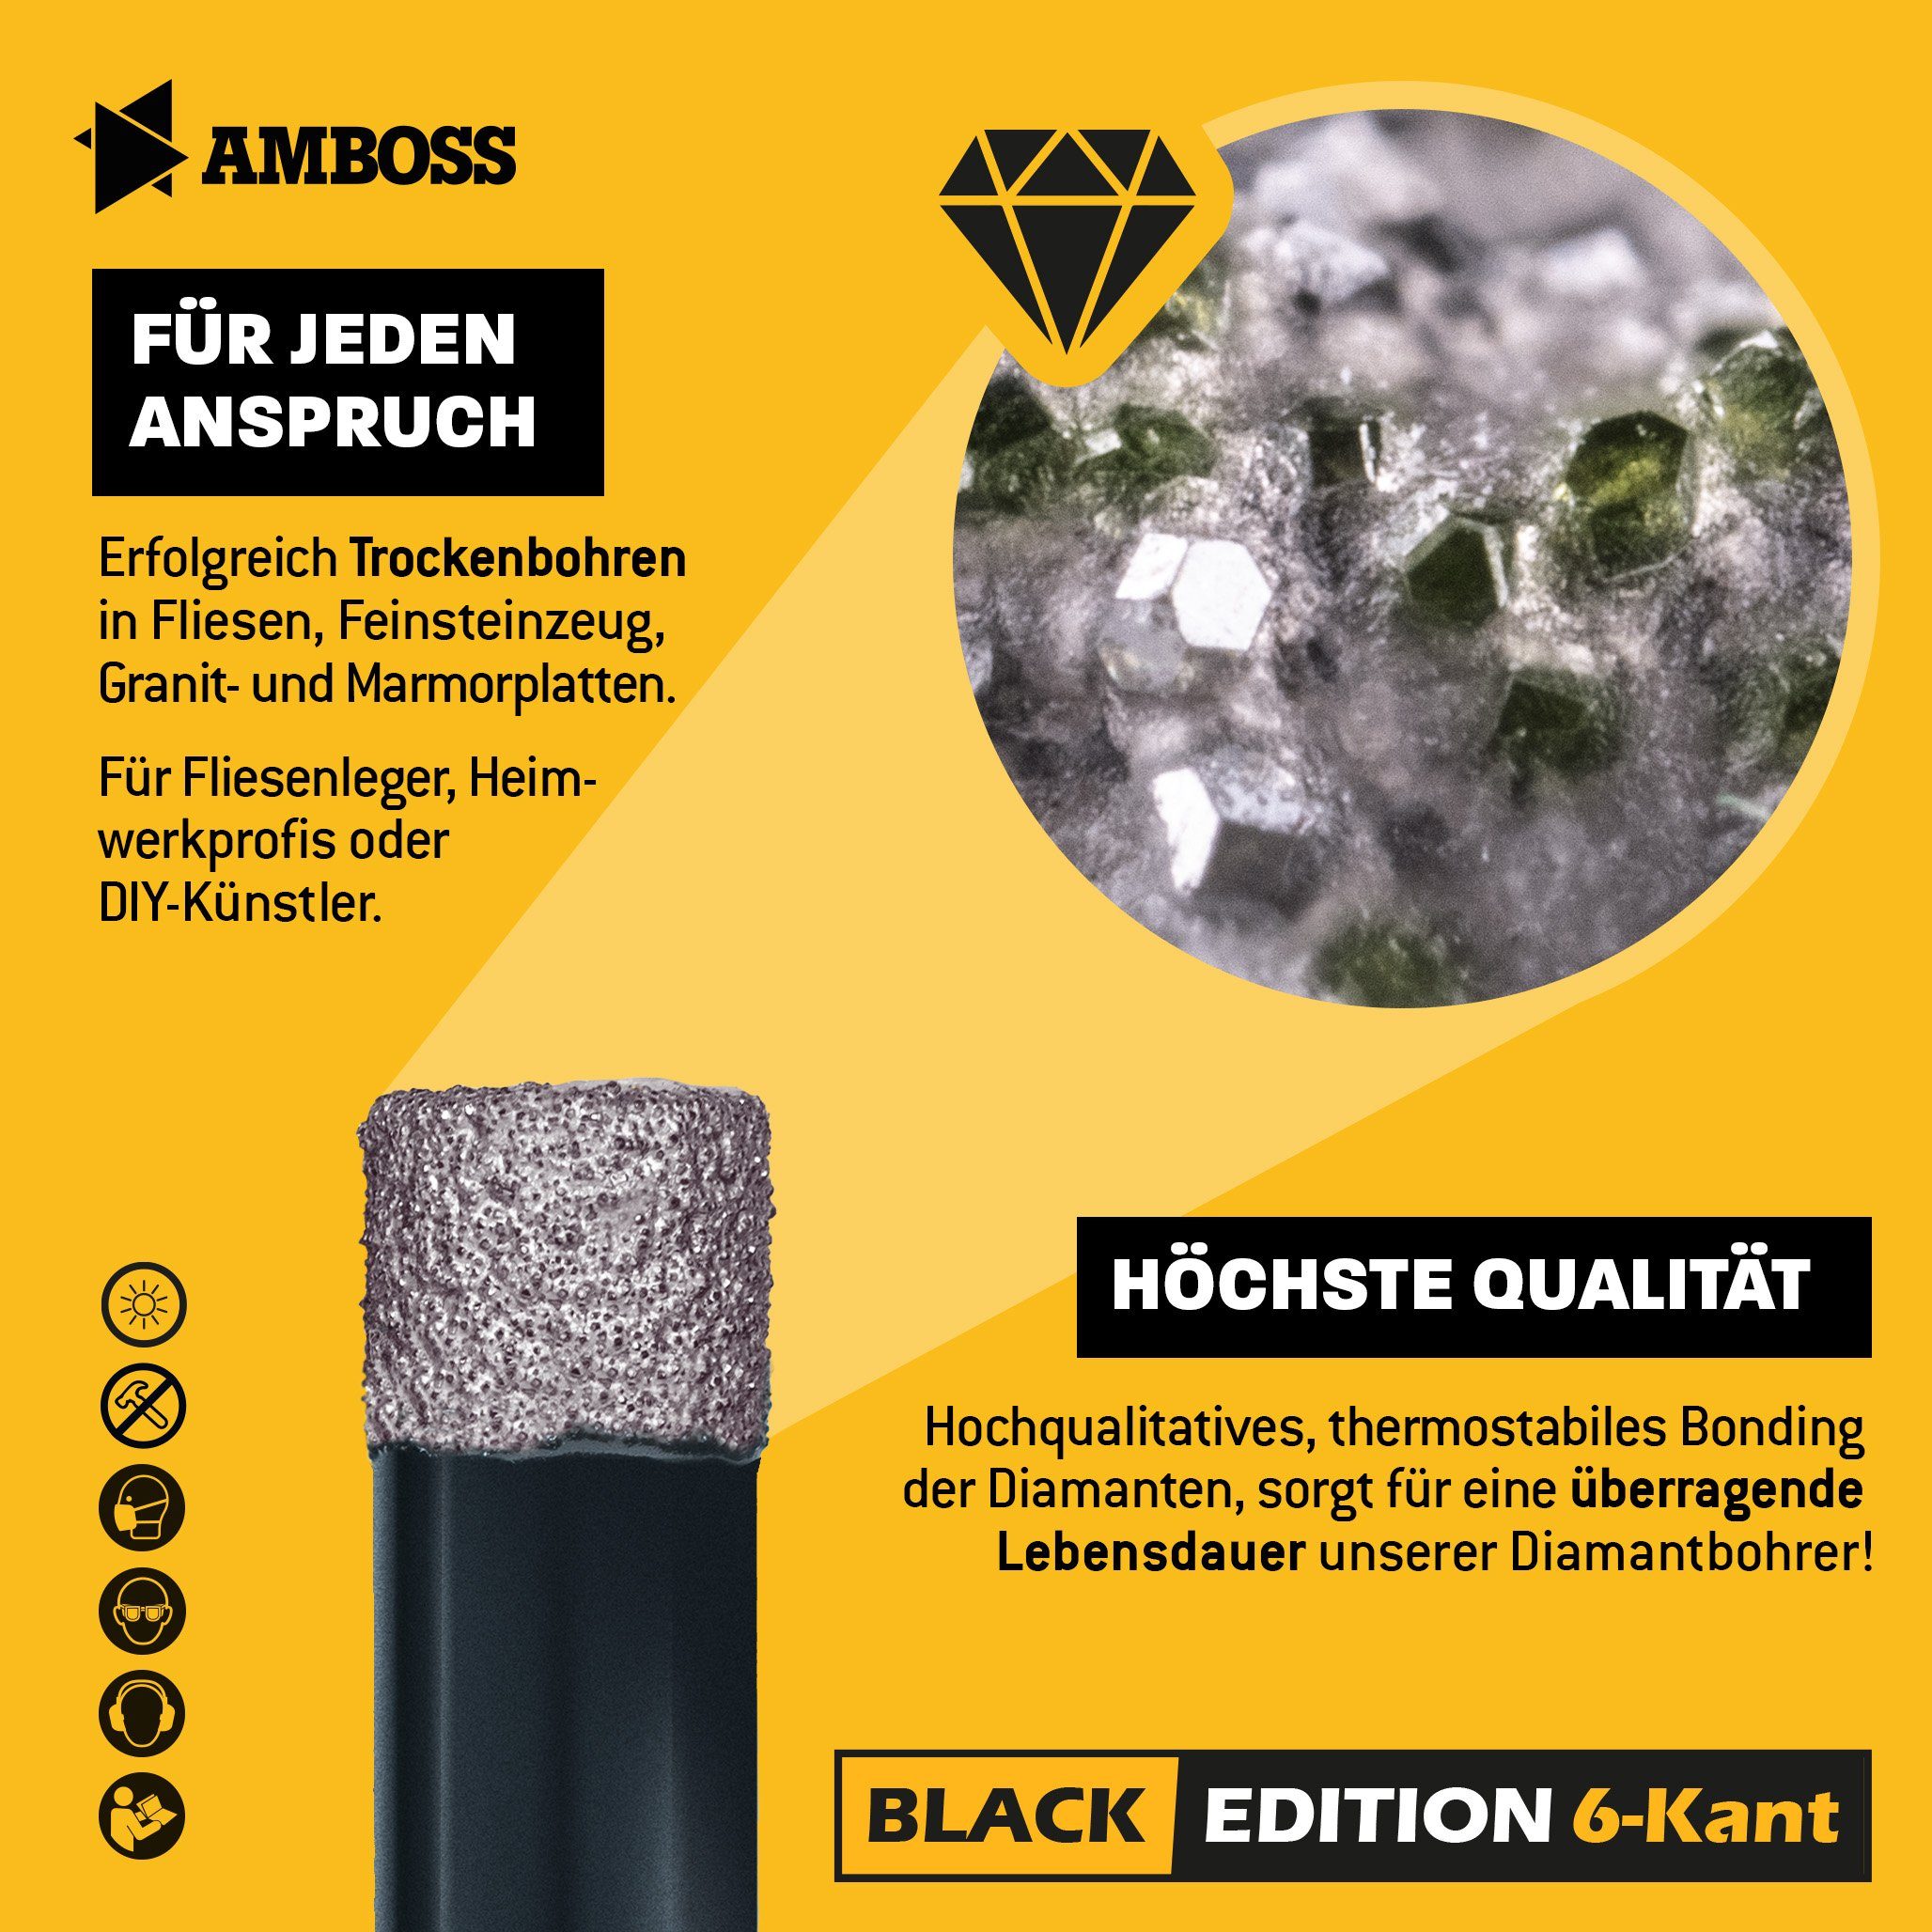 Amboss Werkzeuge 12 Black Ø mm, Diamant 12 Bohrer Edition Amboss Lochsäge mm